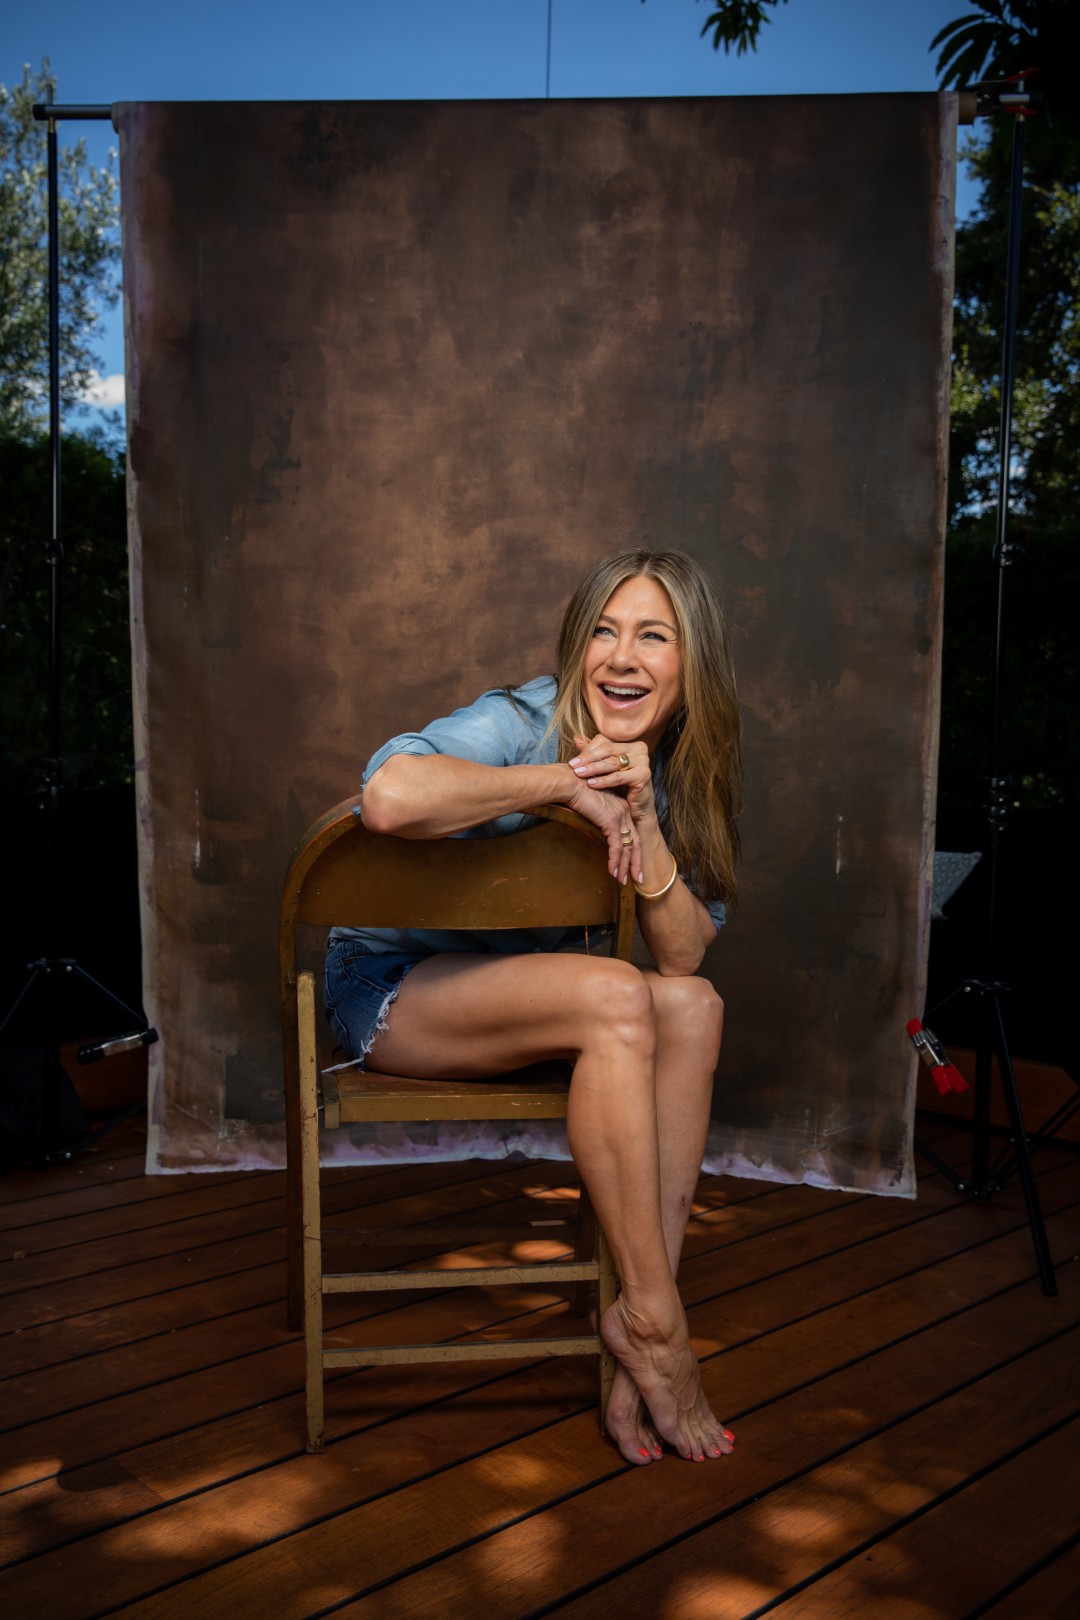 Fotos n°3 : El L.A Times hizo sucio a Jennifer Aniston!